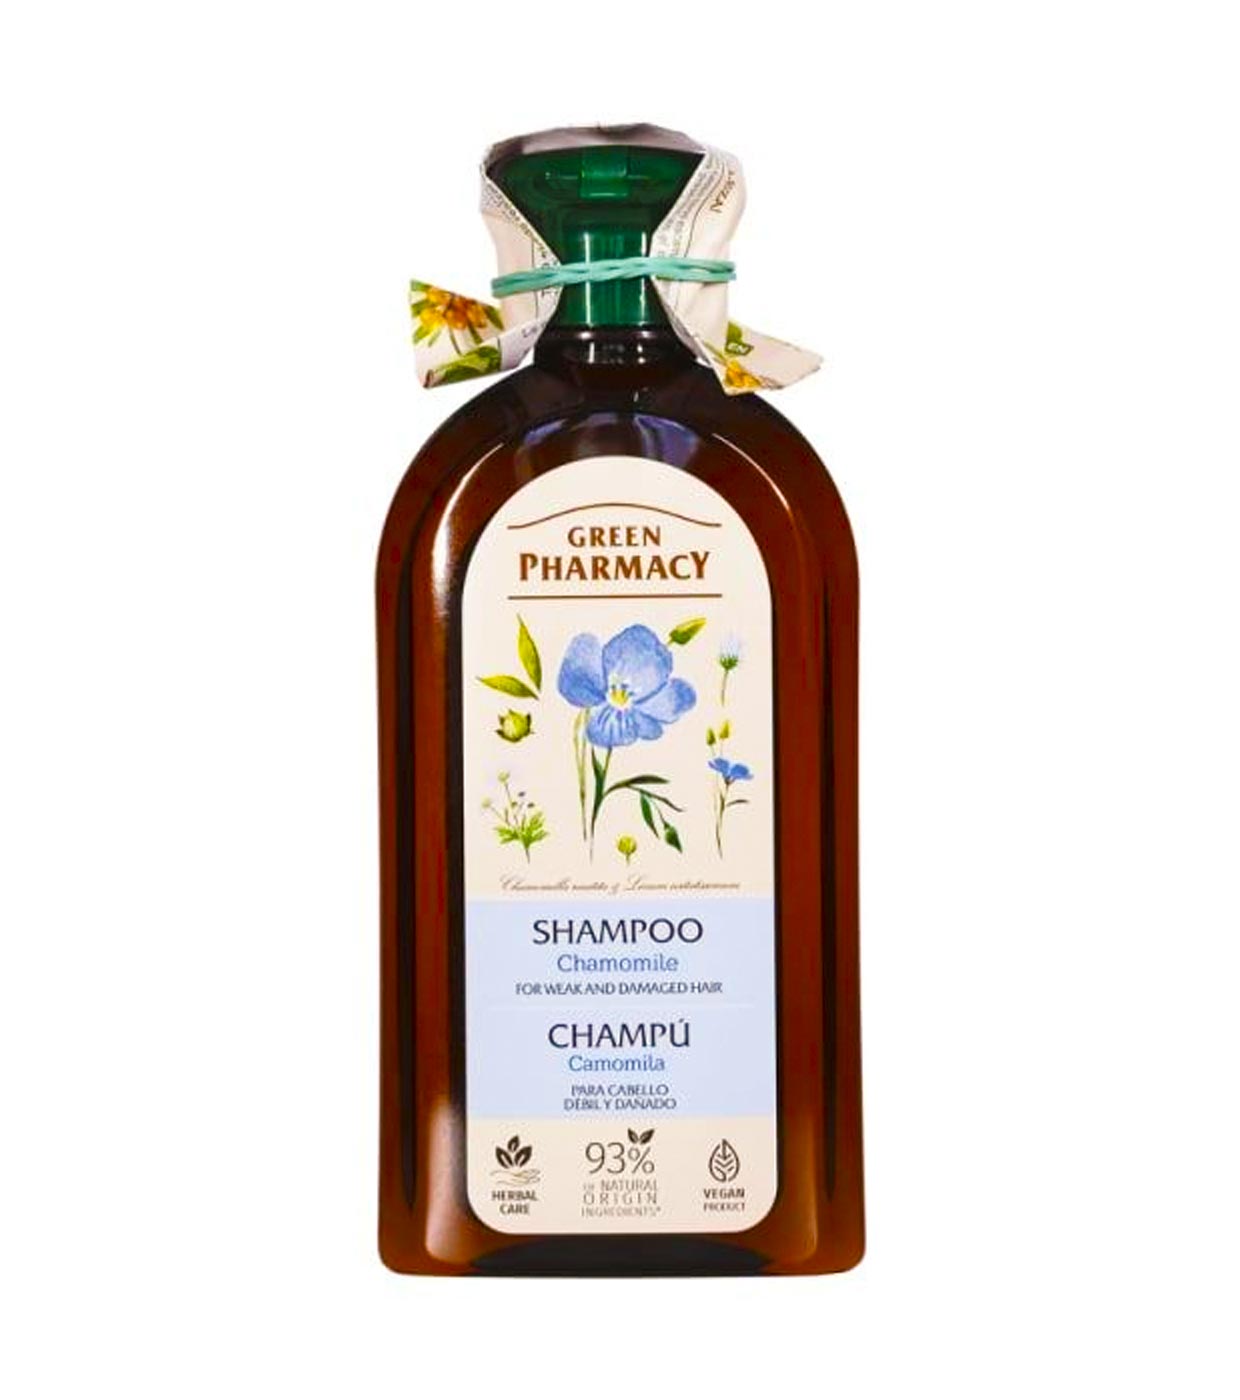 pharmacy szampon